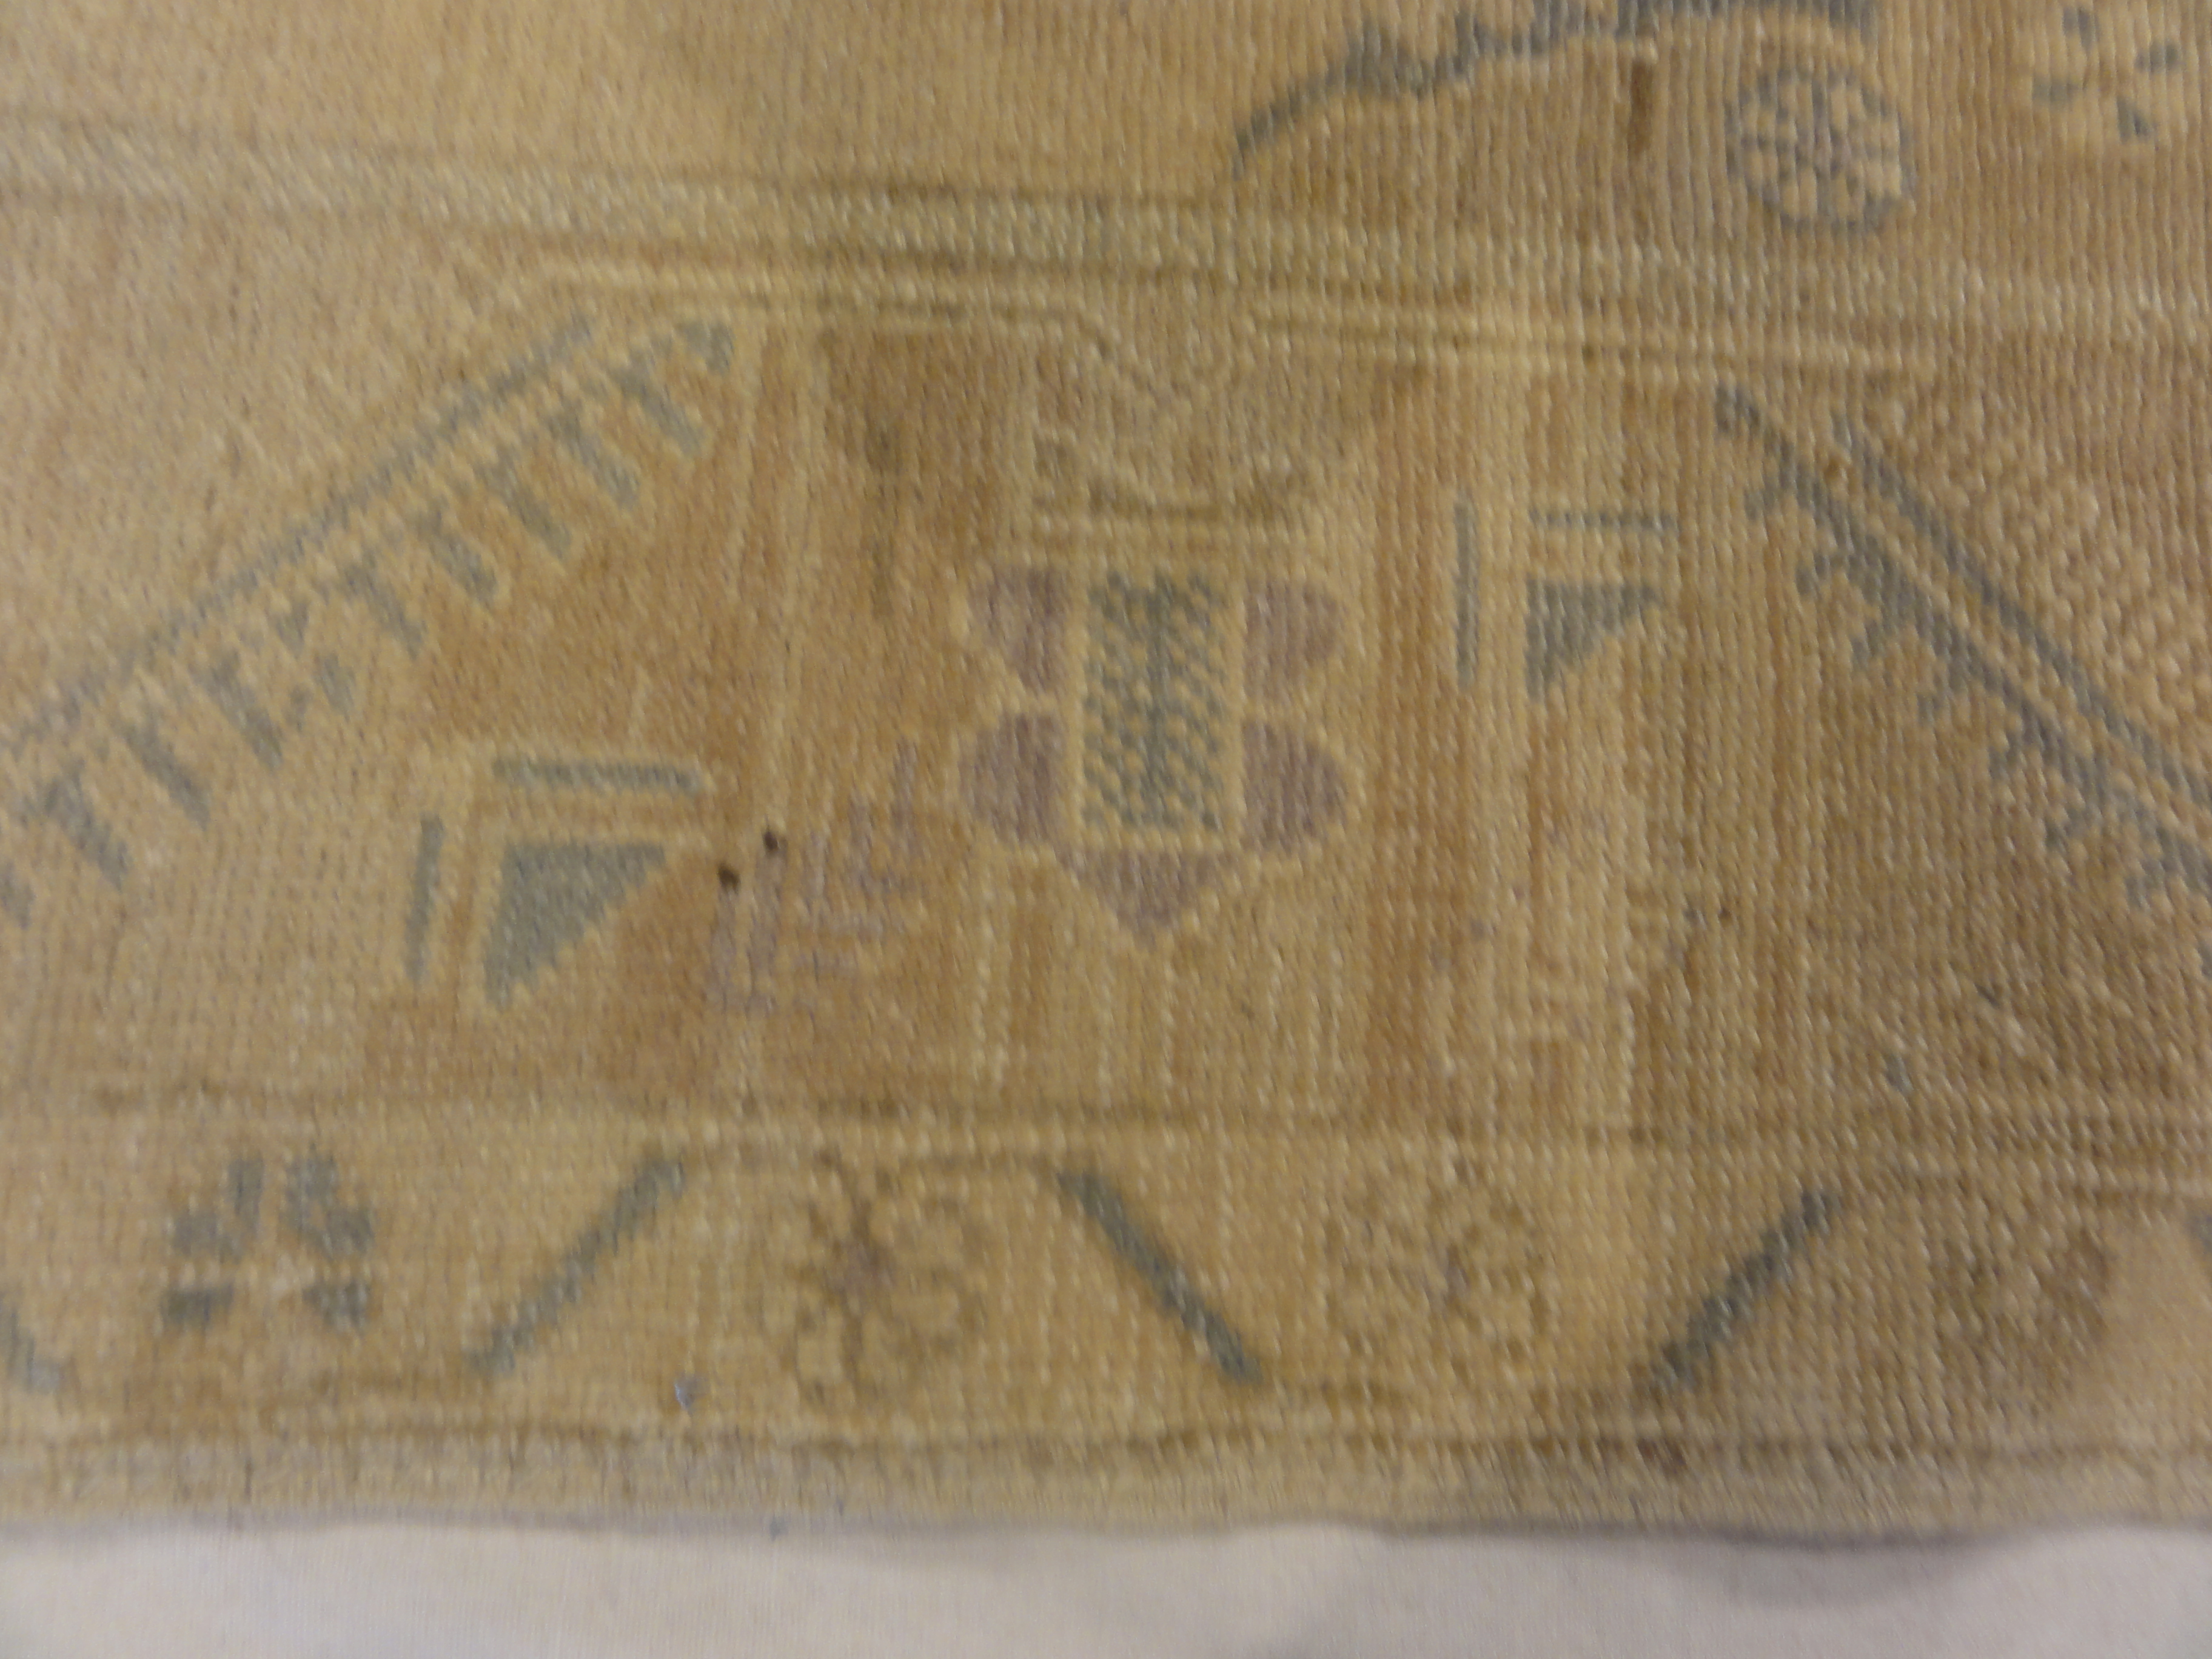 Antique Oushak Rugs & More Oriental Carpets 27791 4